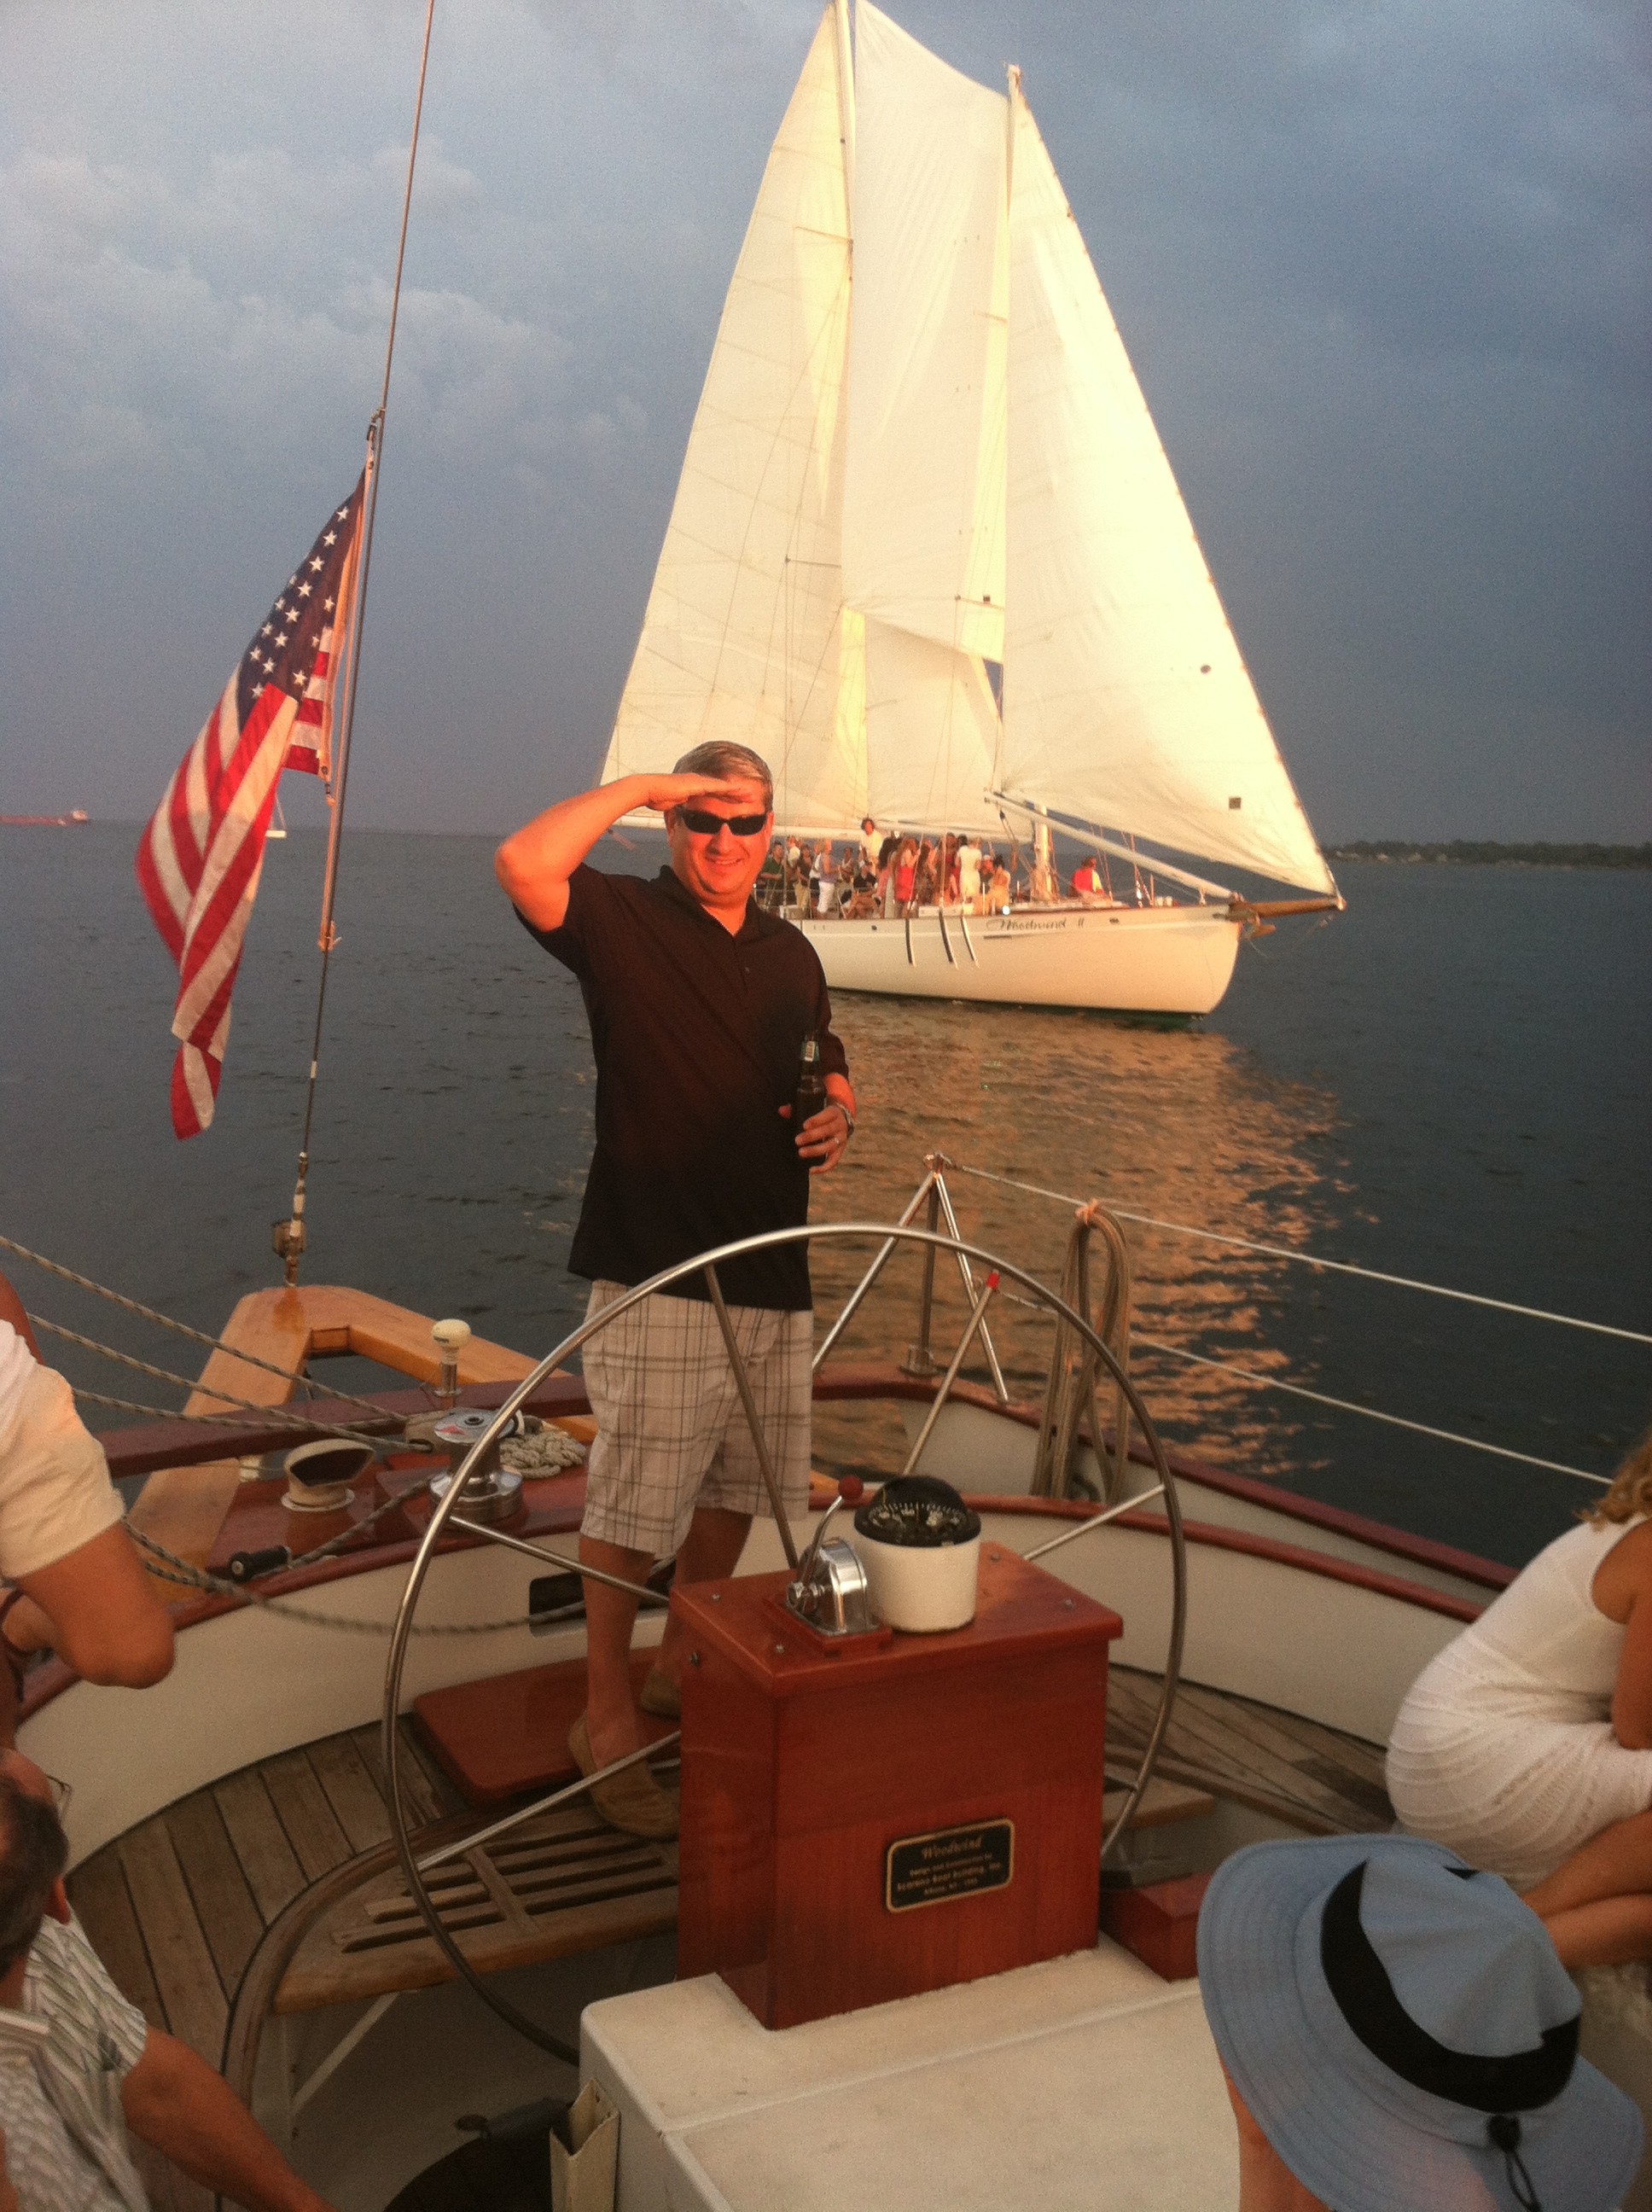 Guest Captain Baker and framed by our sister schooner behind him